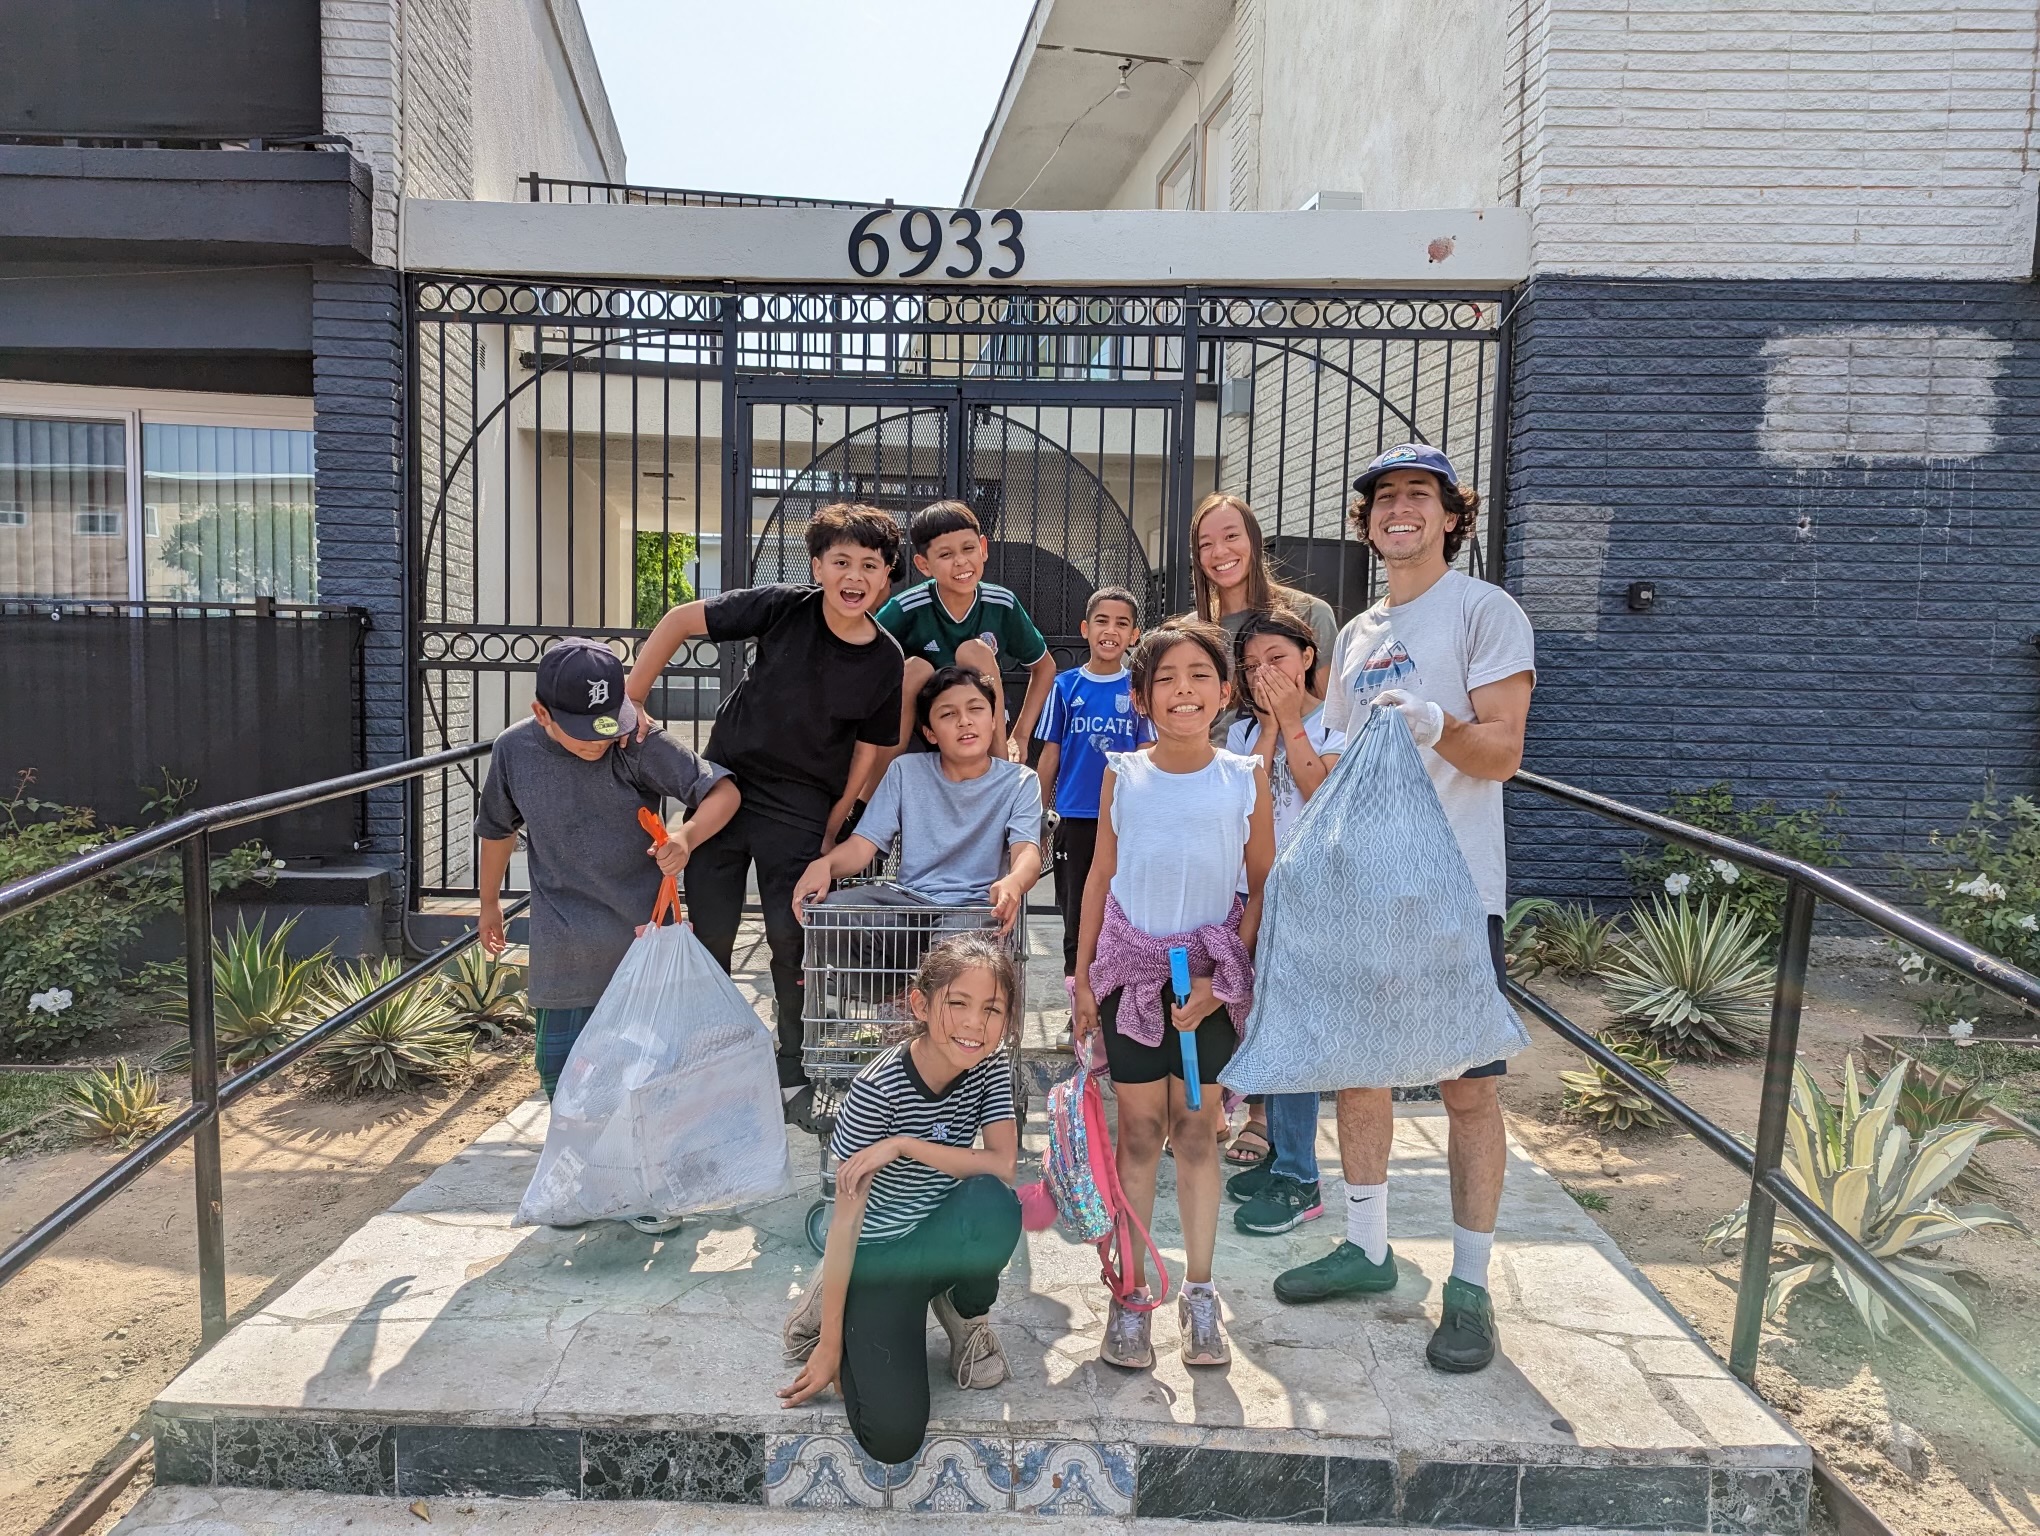 A journey of dedication: Building community in San Gabriel, California